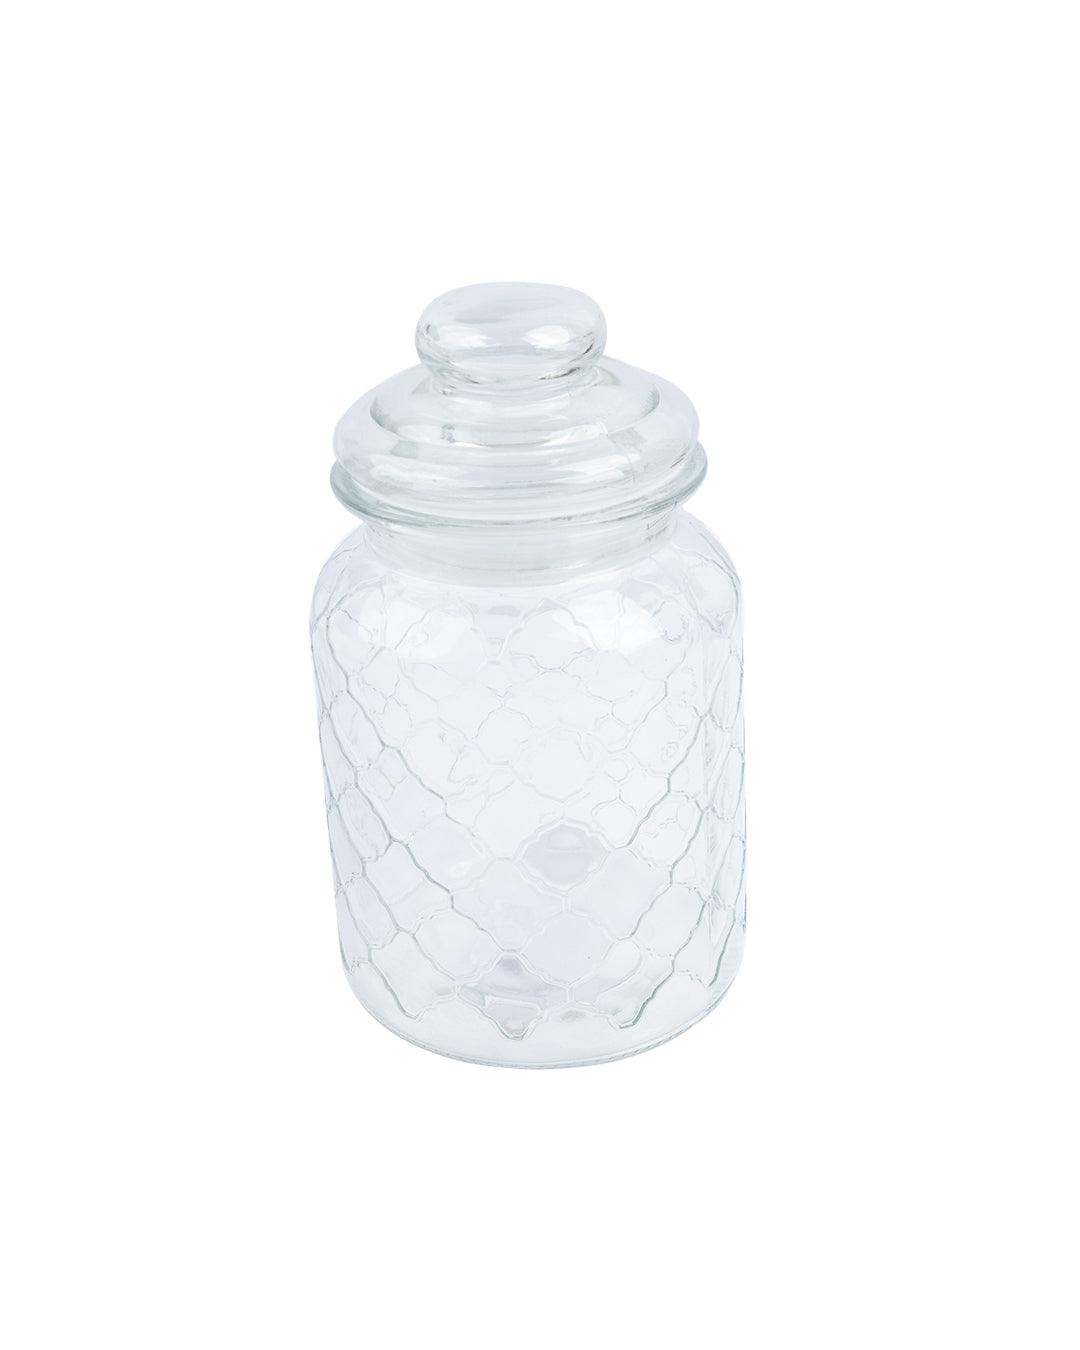 Kitchen Jar with Lid, Transparent (Grid Pattern), Glass, 600 mL - MARKET 99